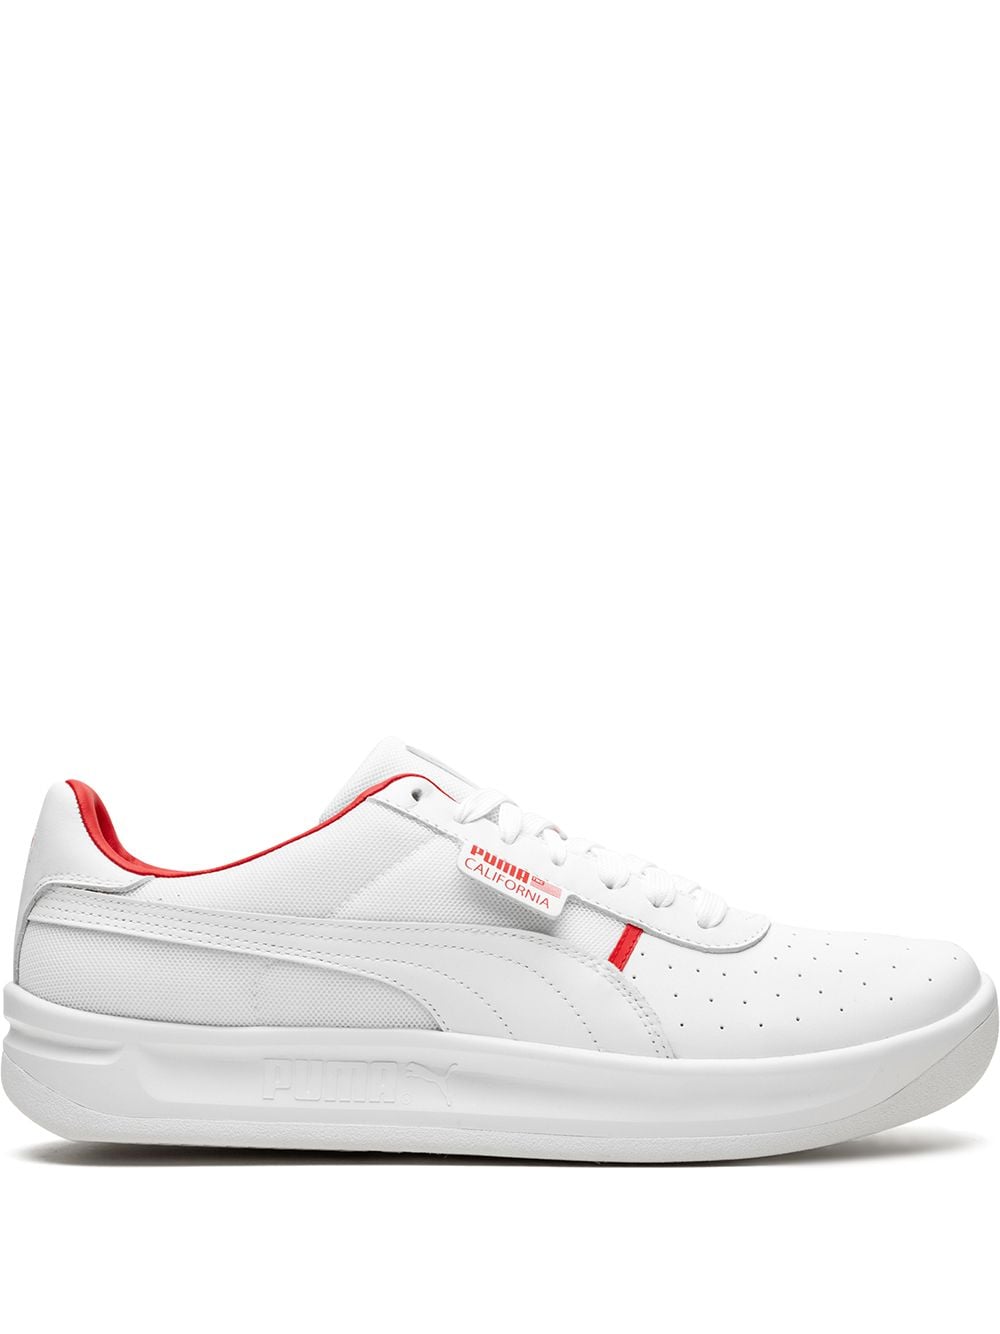 PUMA x California Tech Luxe "Nipsey Hussle" sneakers - White von PUMA